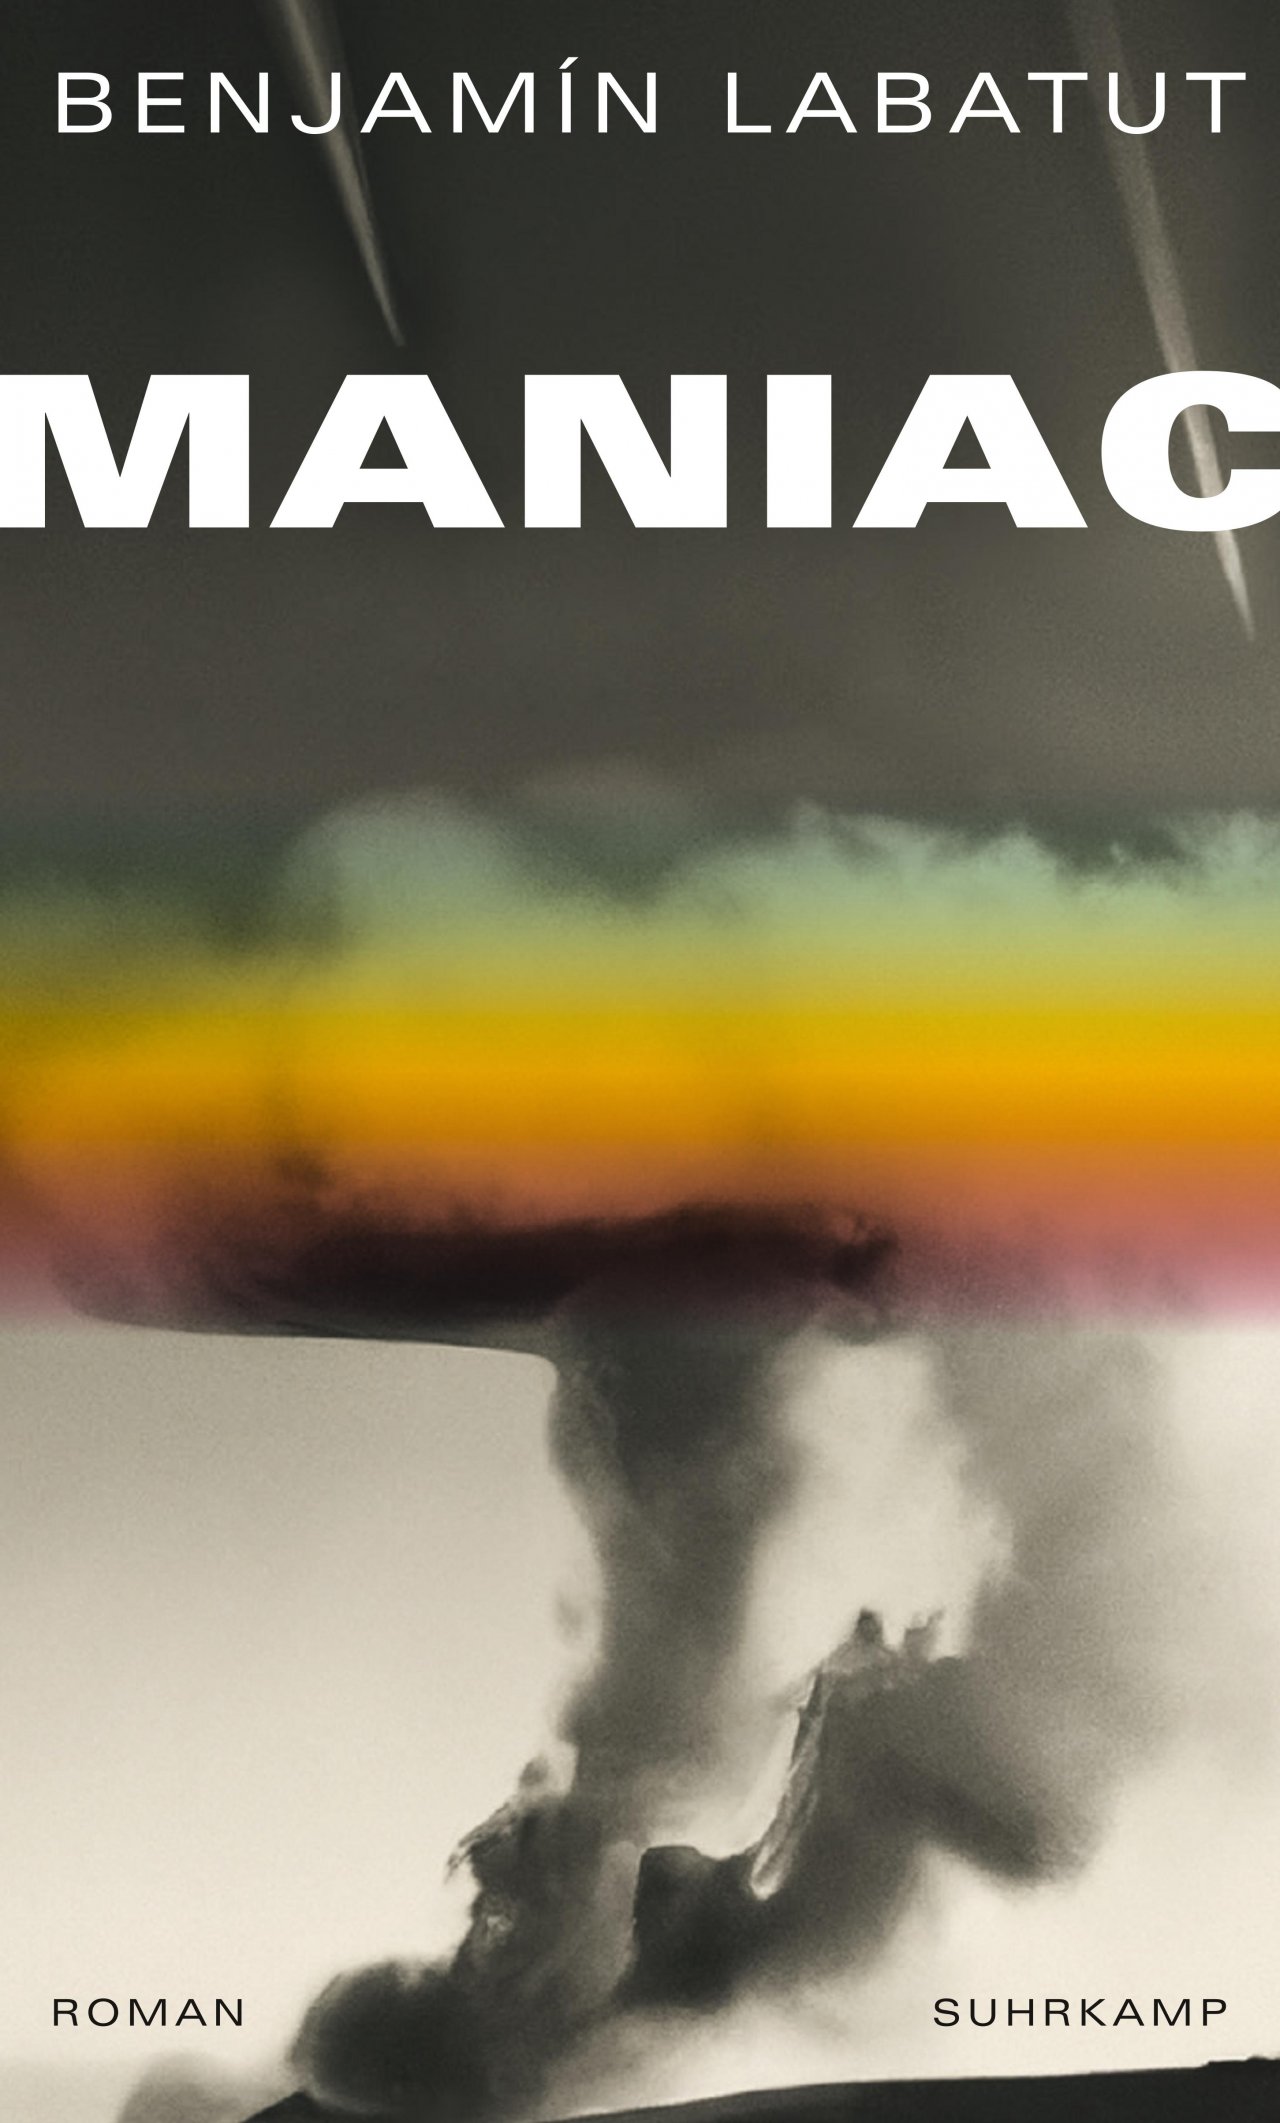 PDF Download] The Maniac By Benjamín Labatut by marjplafker77 - Issuu